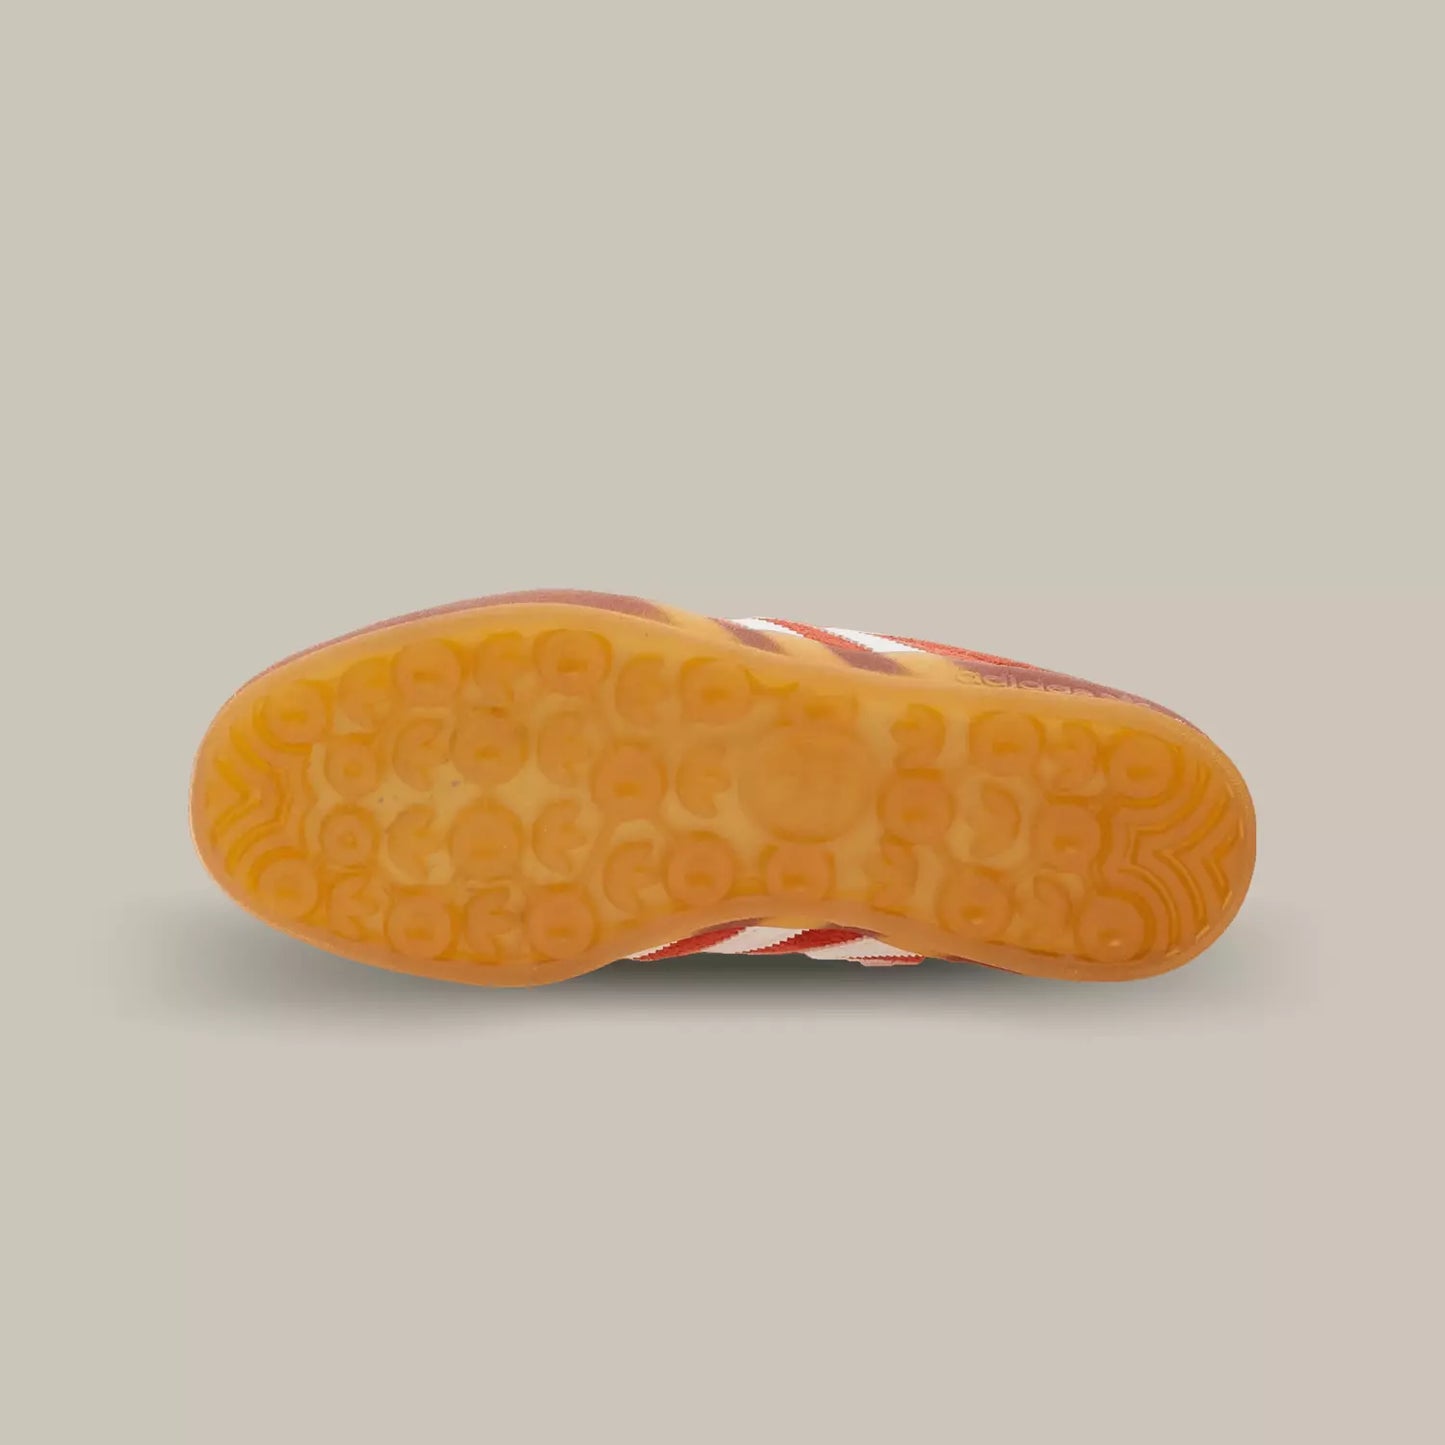 La semelle en gomme de caopoutchoux de la Adidas Gazelle Indoor Bold Orange